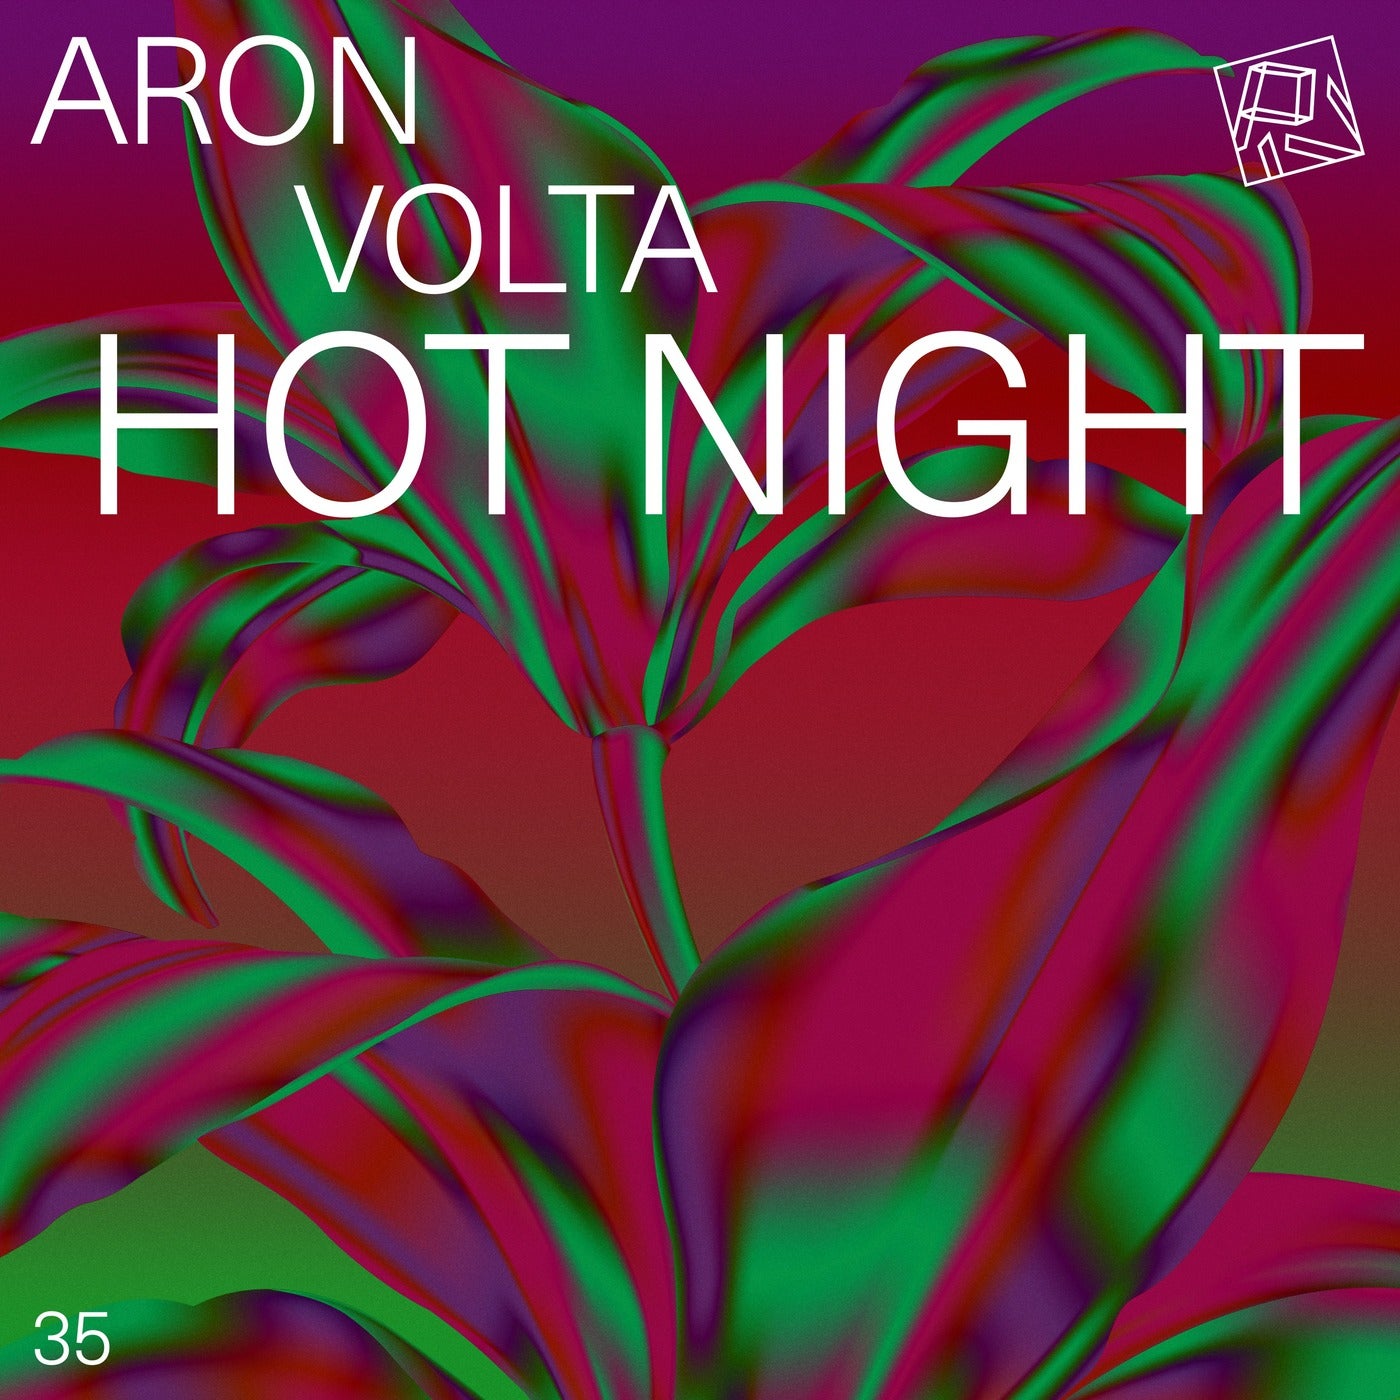 Aron Volta – Hot Night [PIV035]